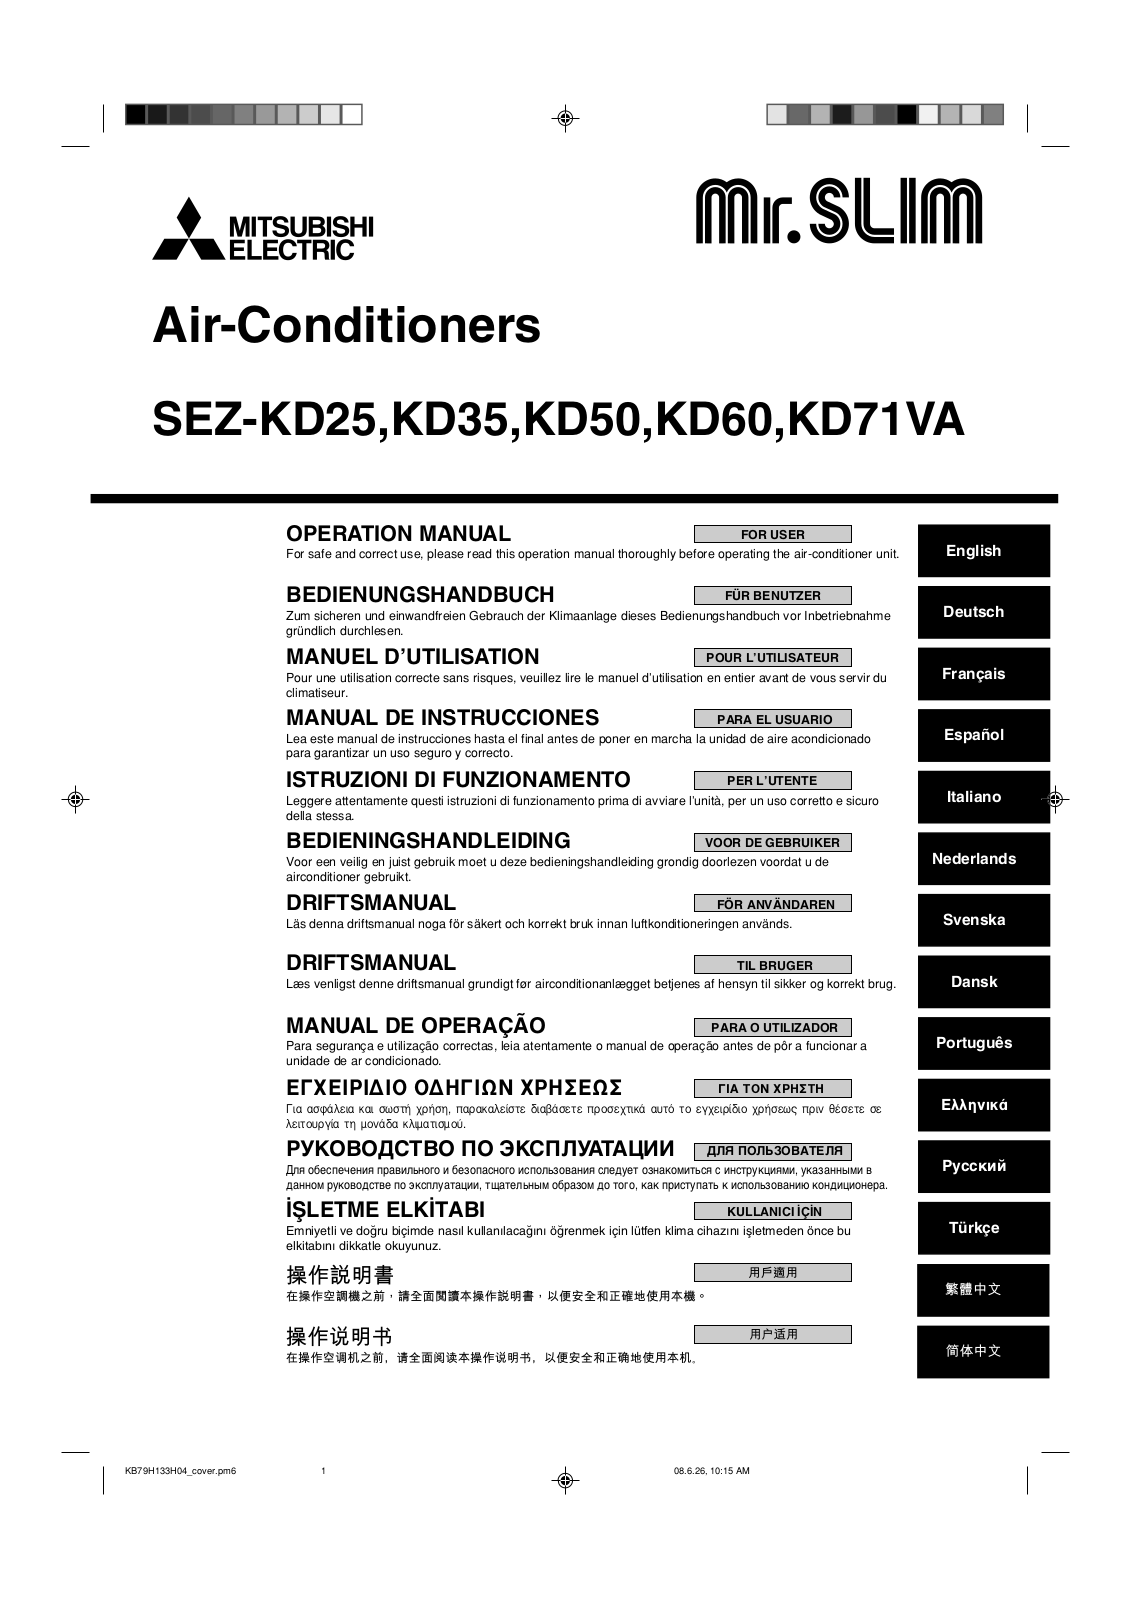 Mitsubishi electric SEZ-KD25VAQ, SUZ-KA25VA2 User Manual